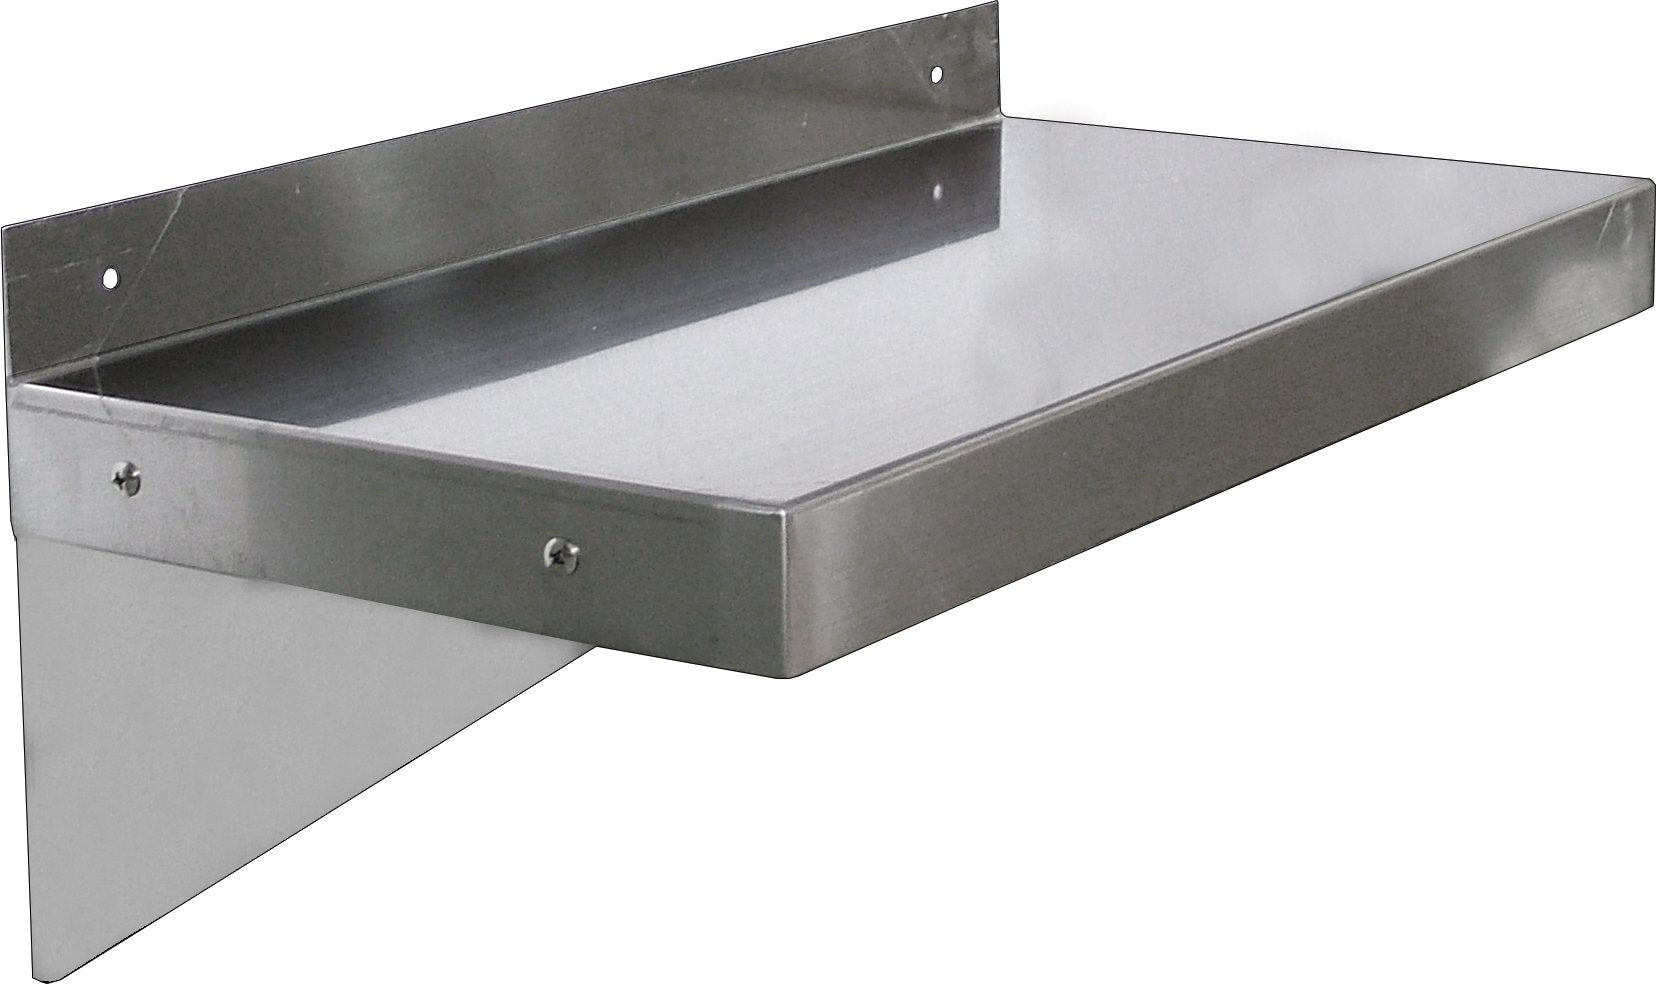 Omcan - 16” x 48” Stainless Steel Wall Shelf - 24410